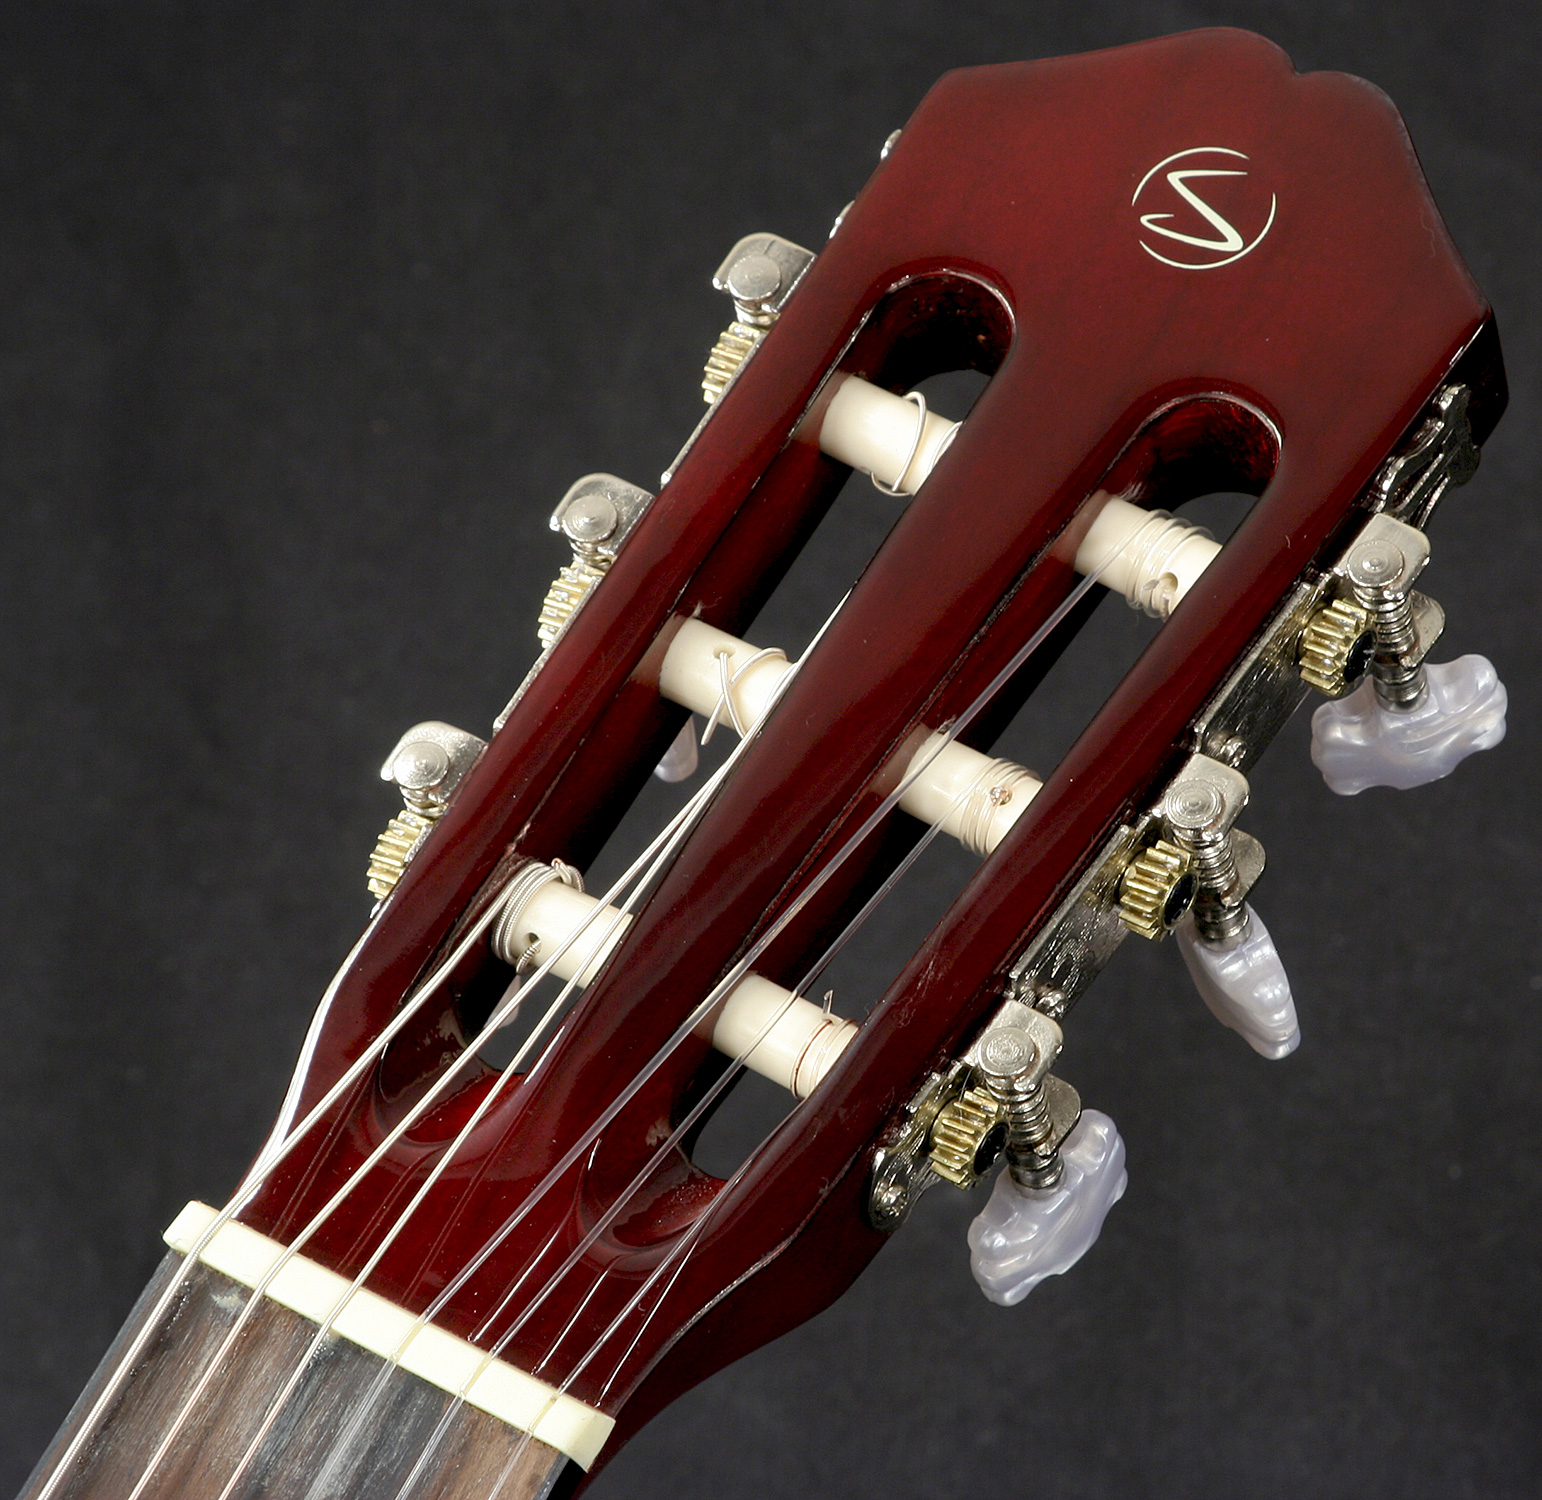 Silvanez Cl44-nat - Natural - Classical guitar 4/4 size - Variation 3